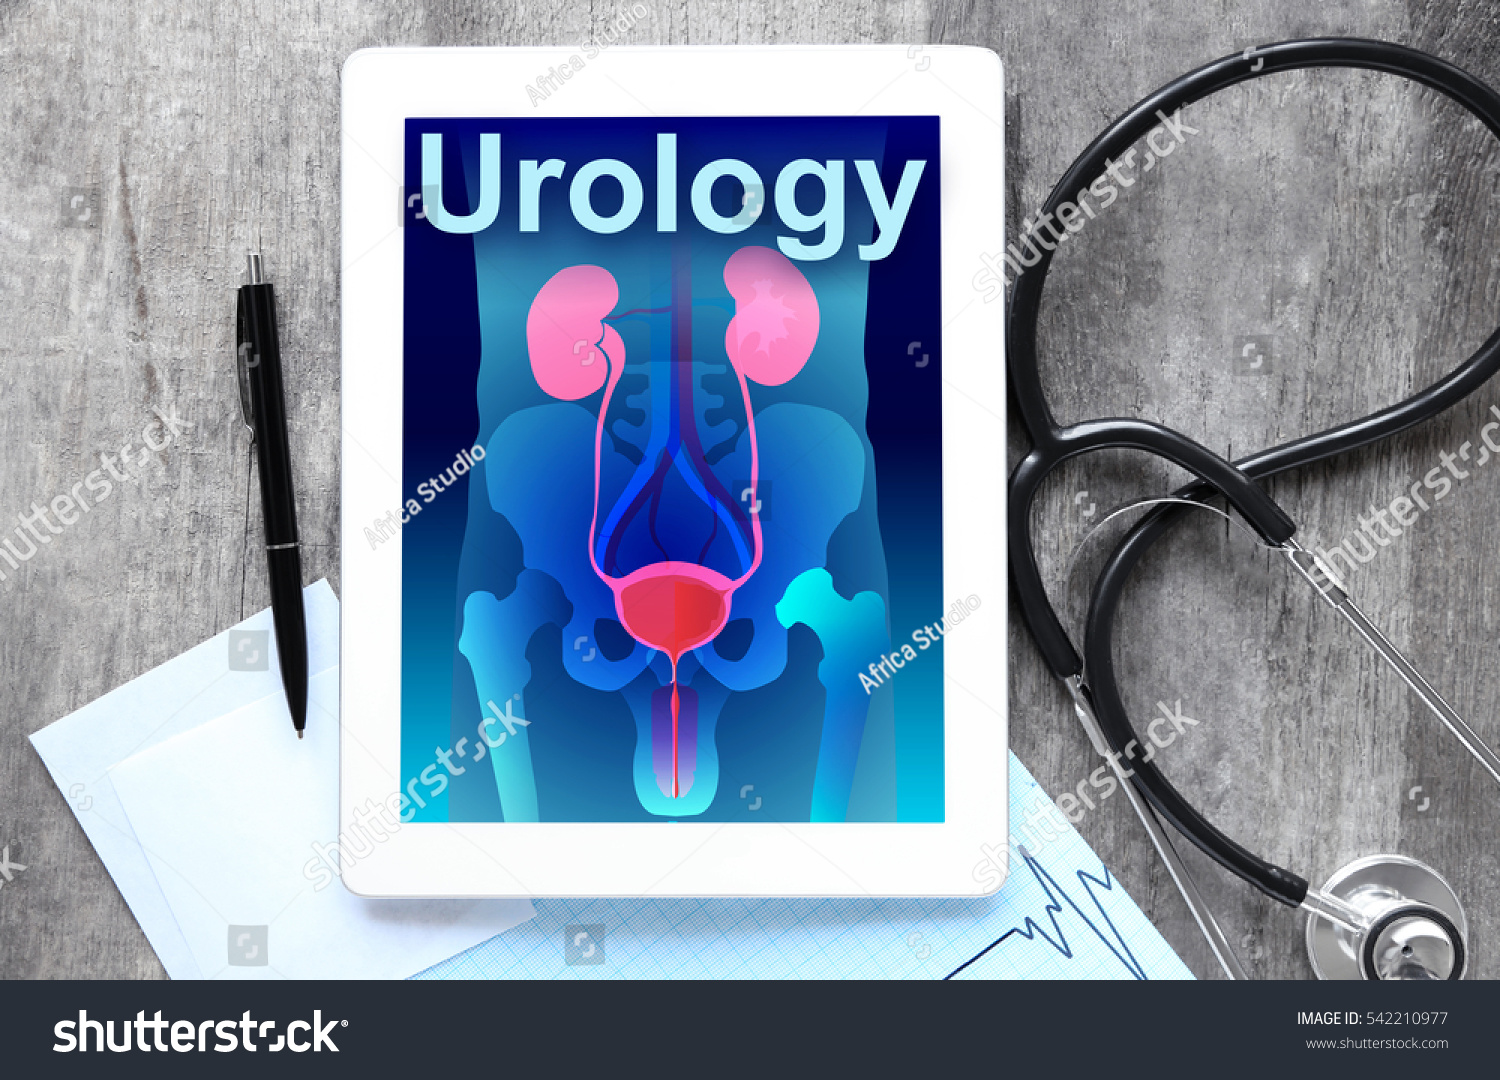 powerpoint-template-urology-anatomy-tablet-and-mljjihuoo